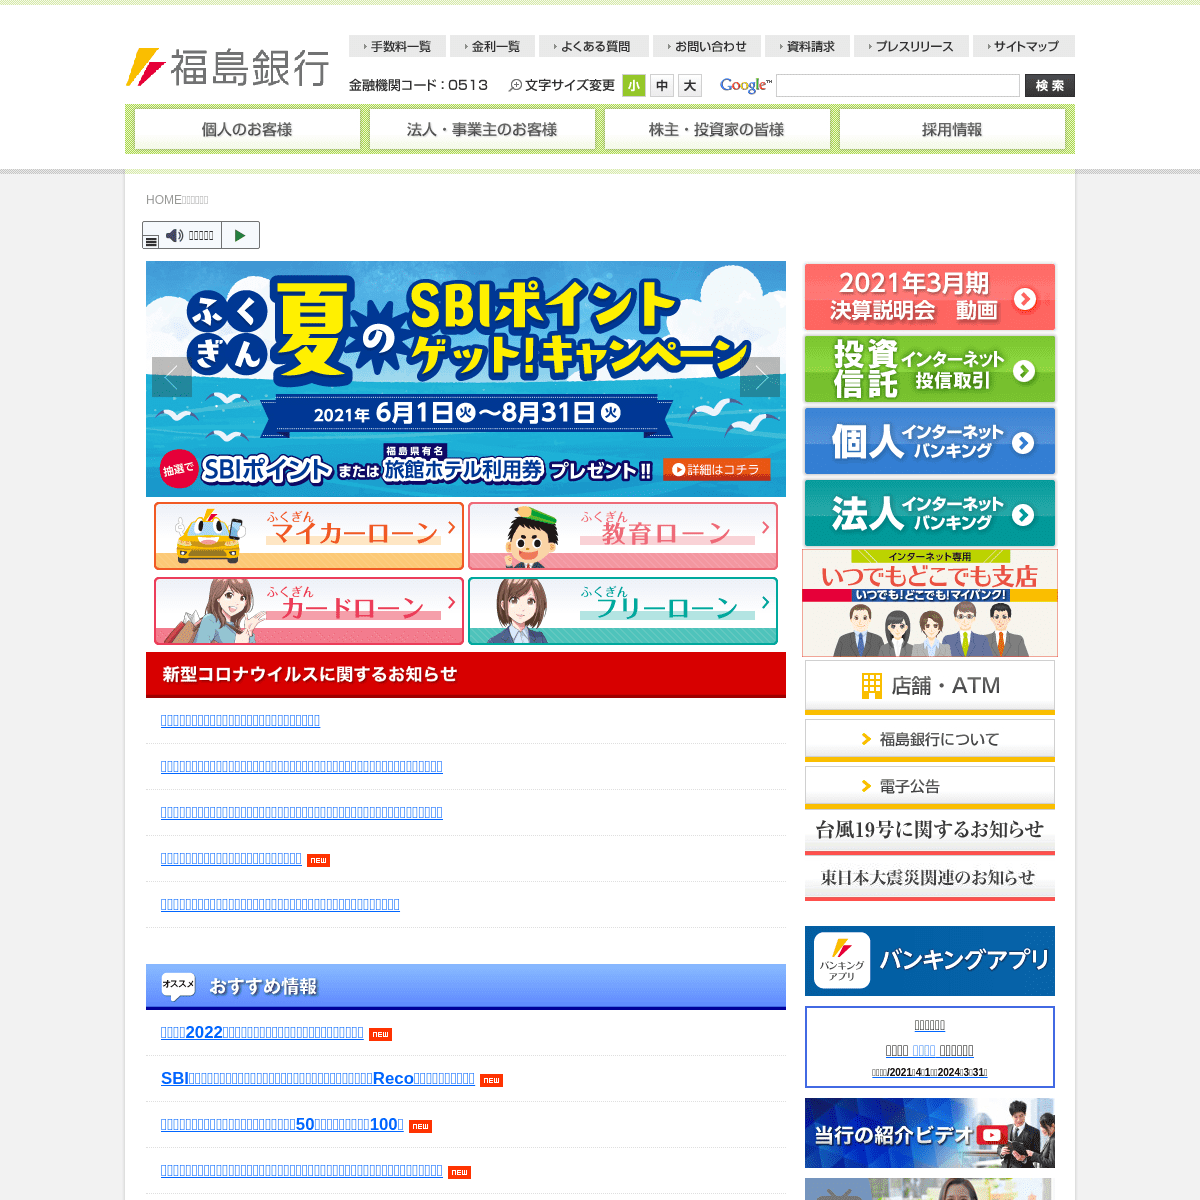 A complete backup of https://fukushimabank.co.jp